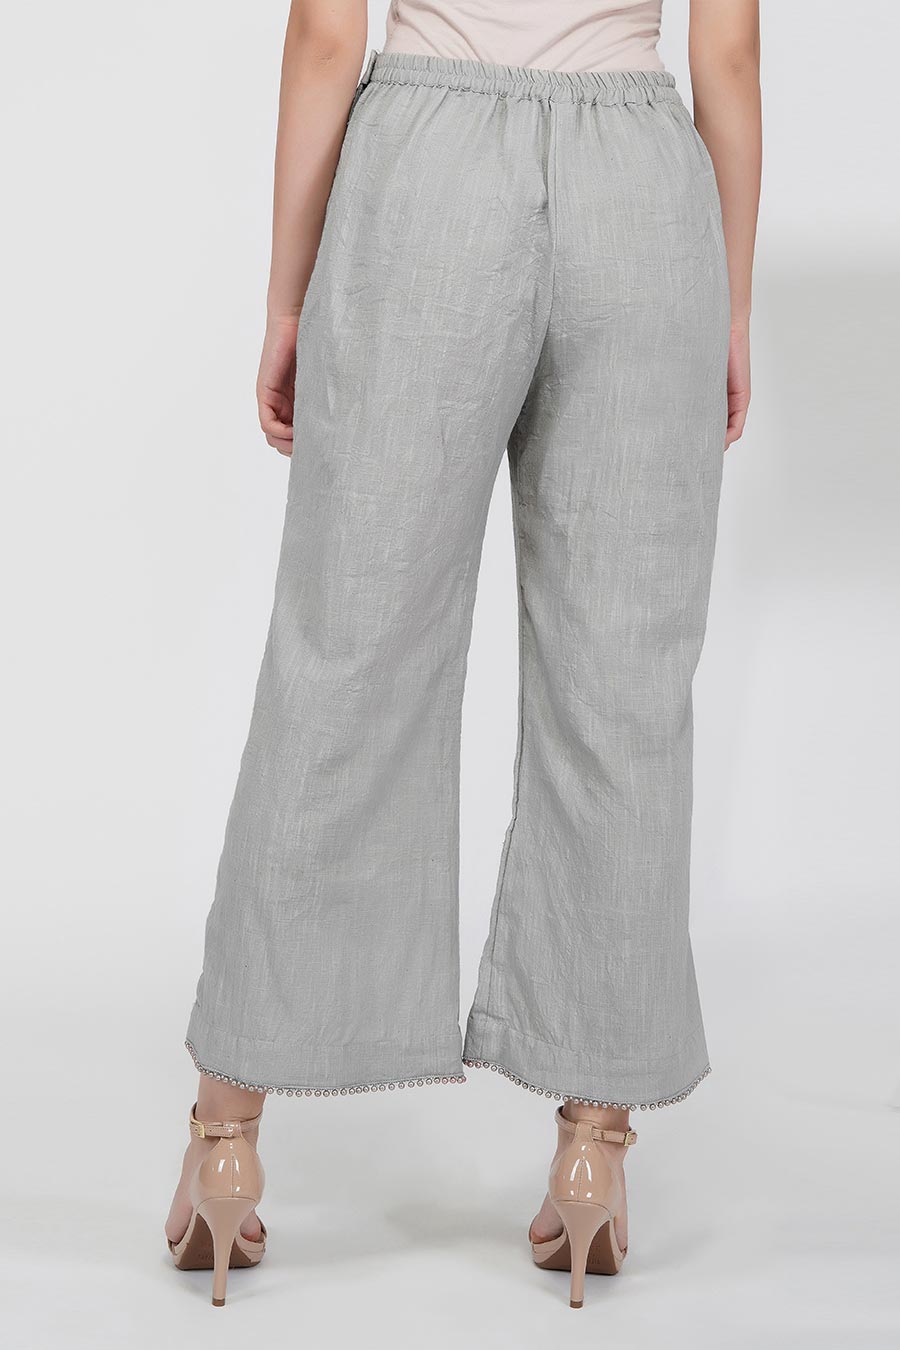 Pearl Hemline Grey Flared Pants